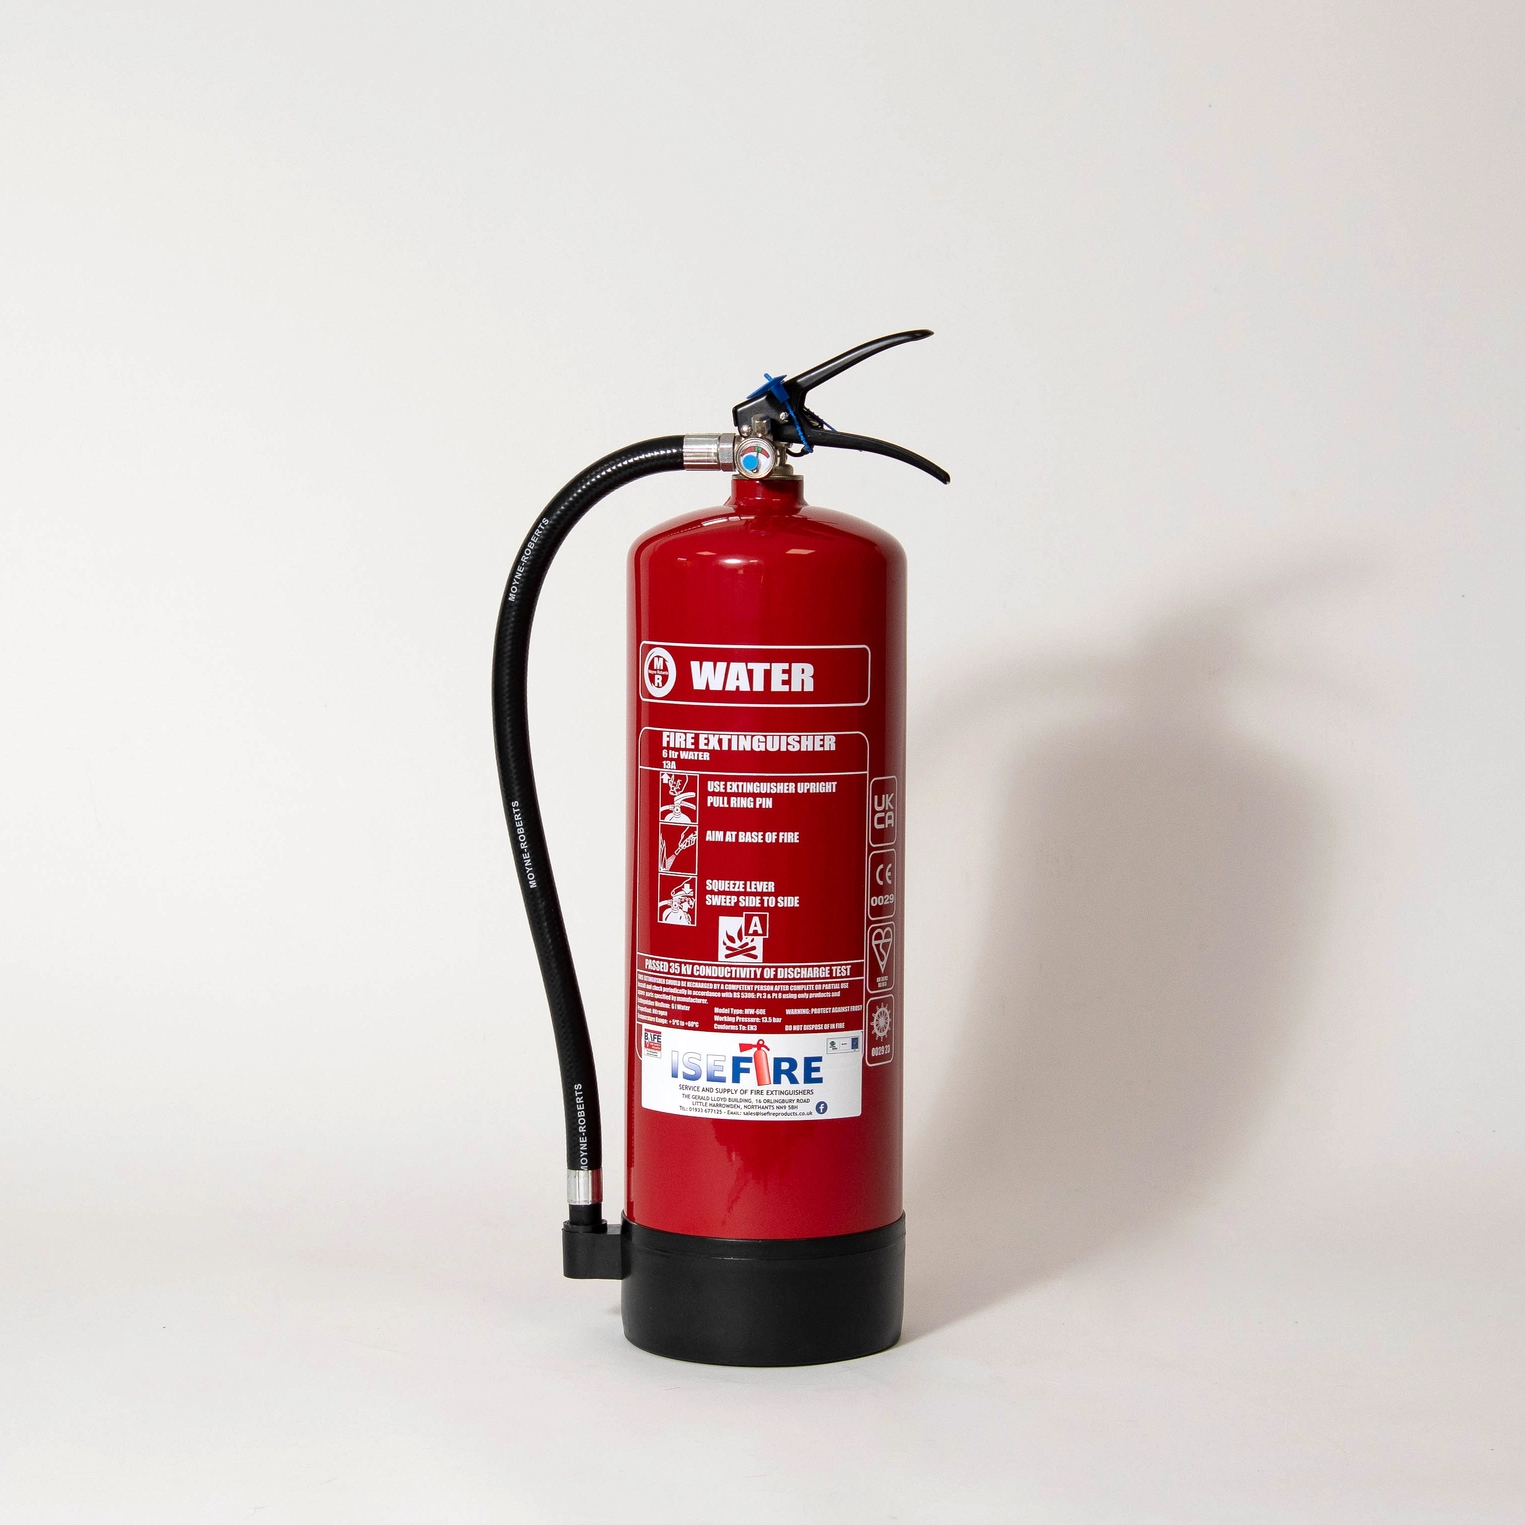 Water fire extinguisher.